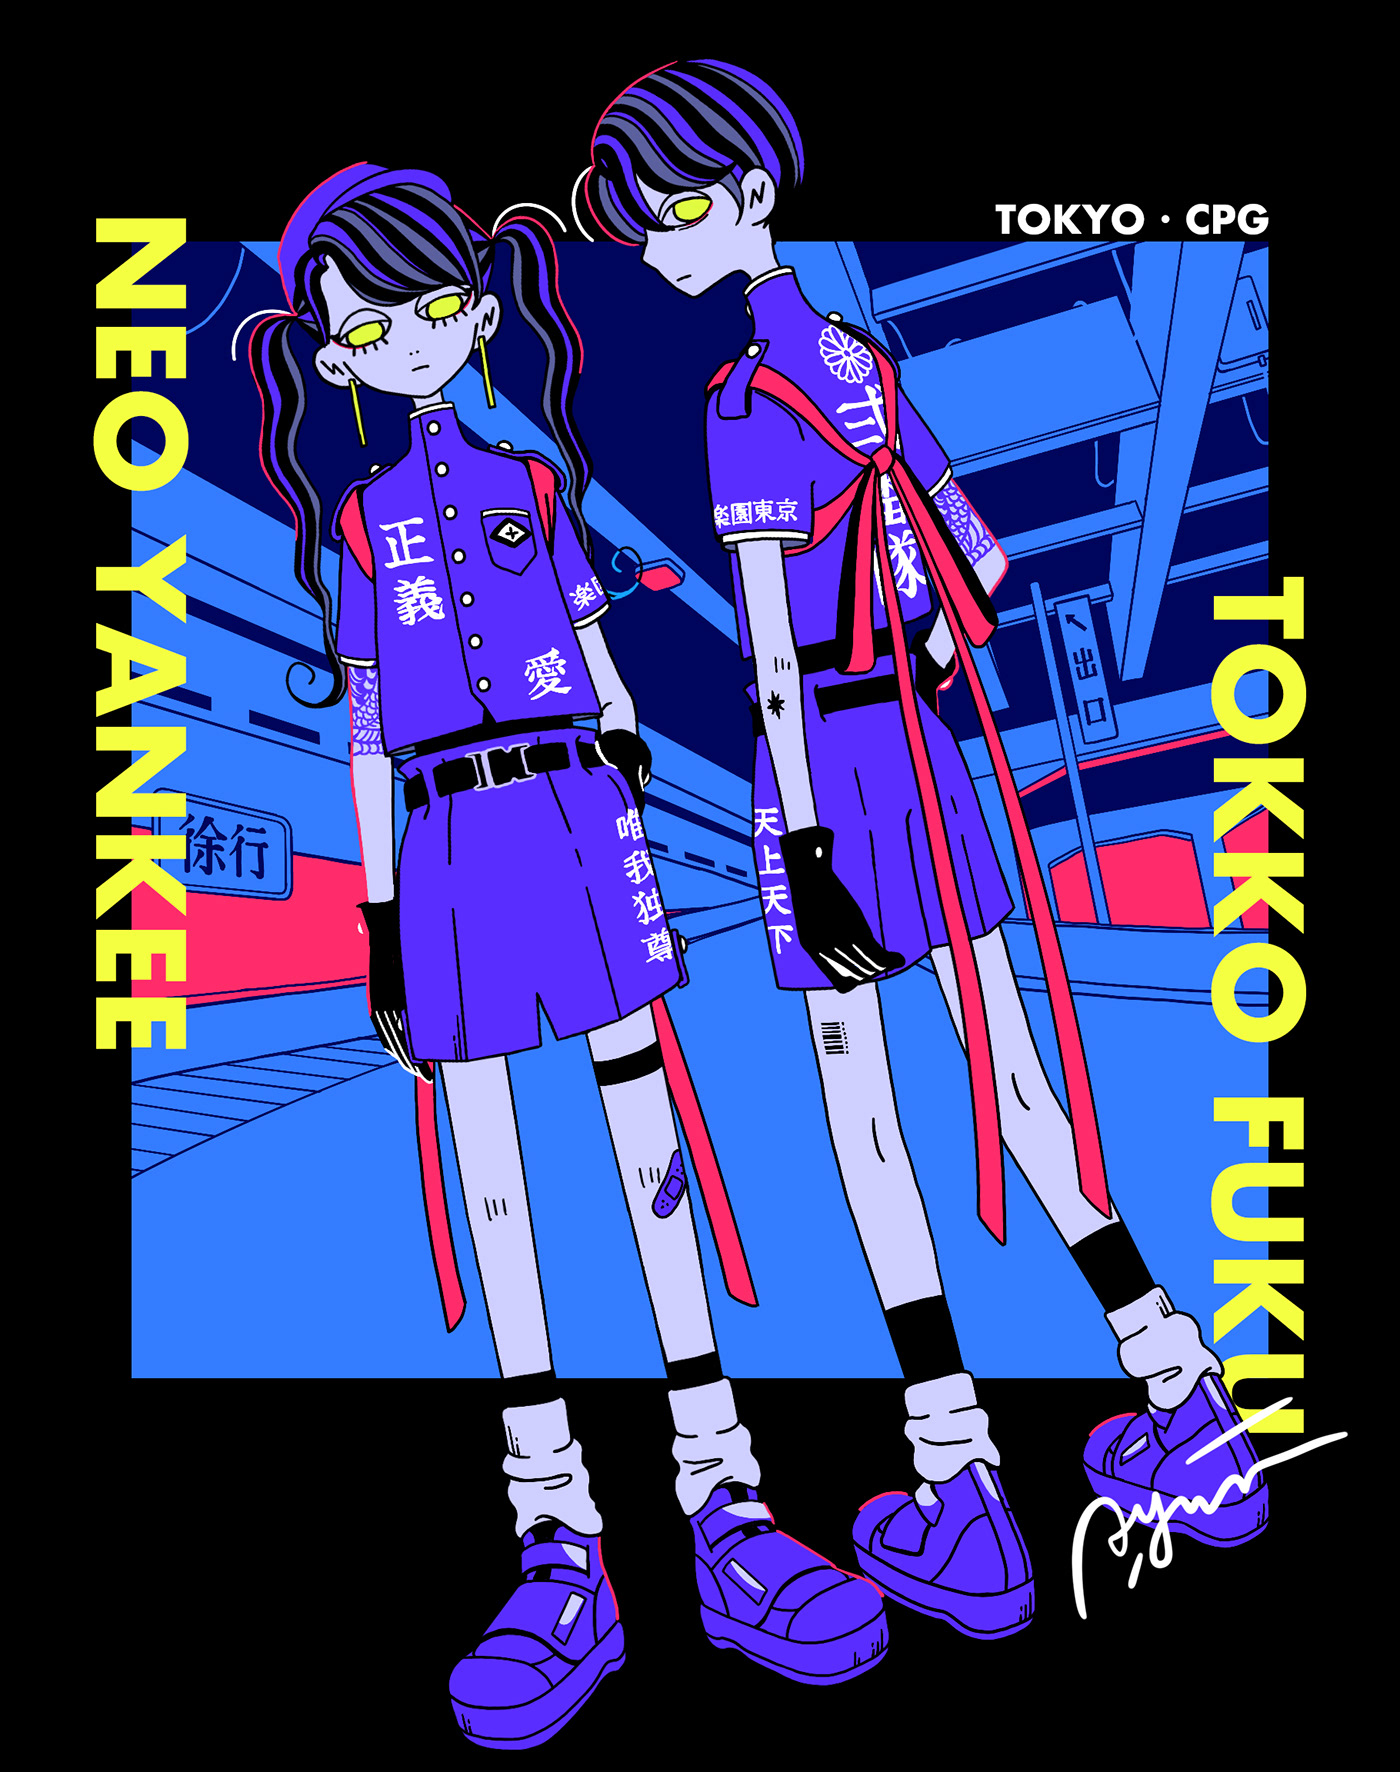 東京悪餓鬼 - Tokyo Neo Yankee on Behance